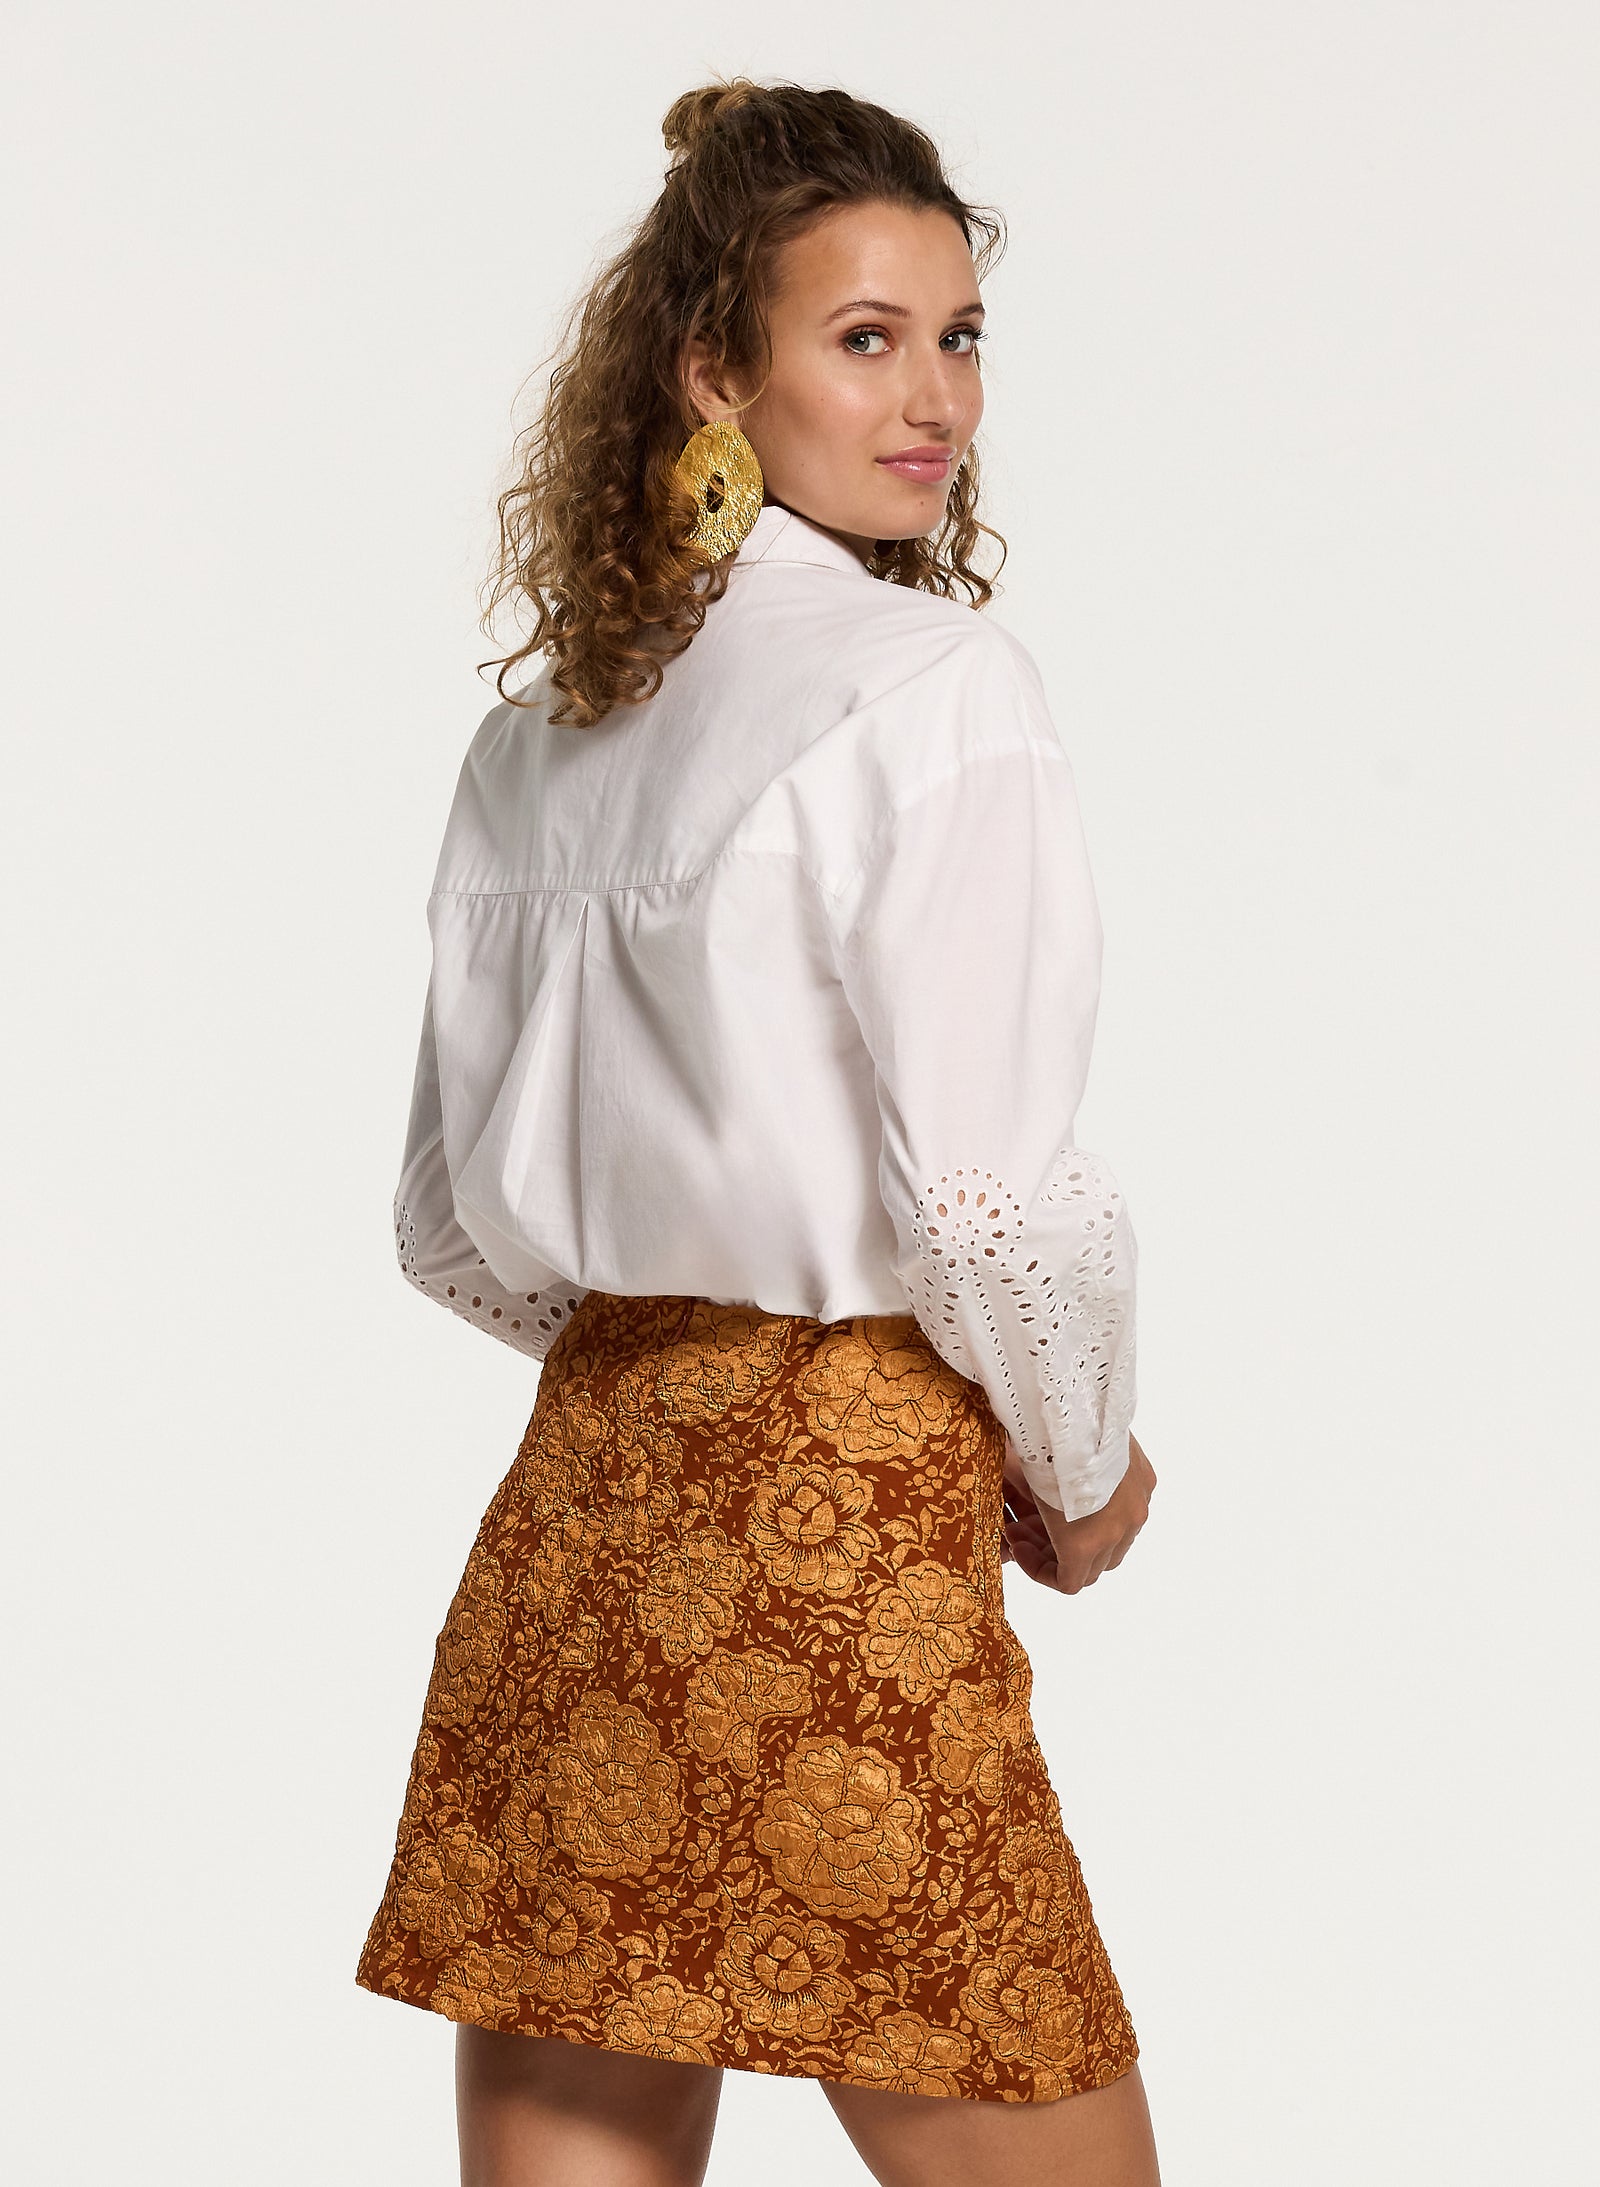 Ladies Copenhagen embroidery blouse